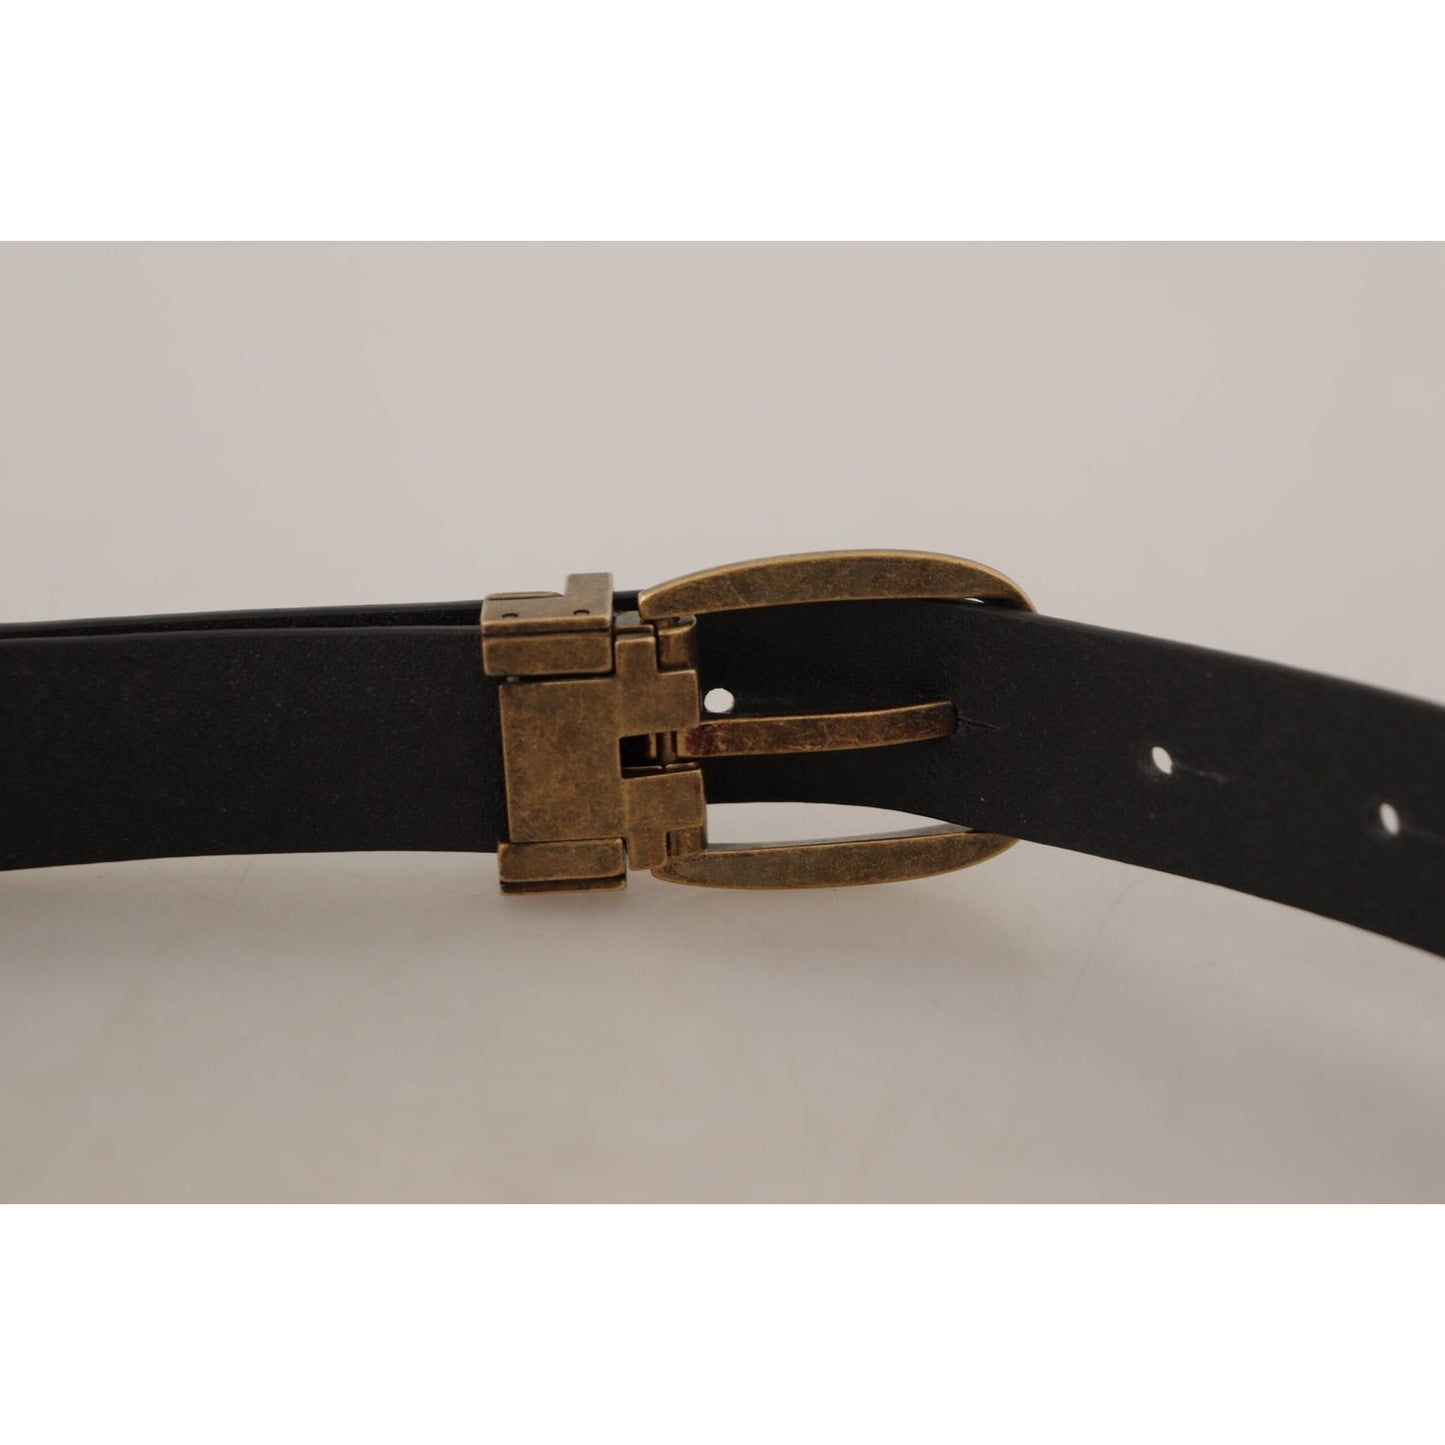 Dolce & Gabbana Elegant Leather Belt with Metal Buckle brown-leather-vintage-style-brass-metal-buckle-belt